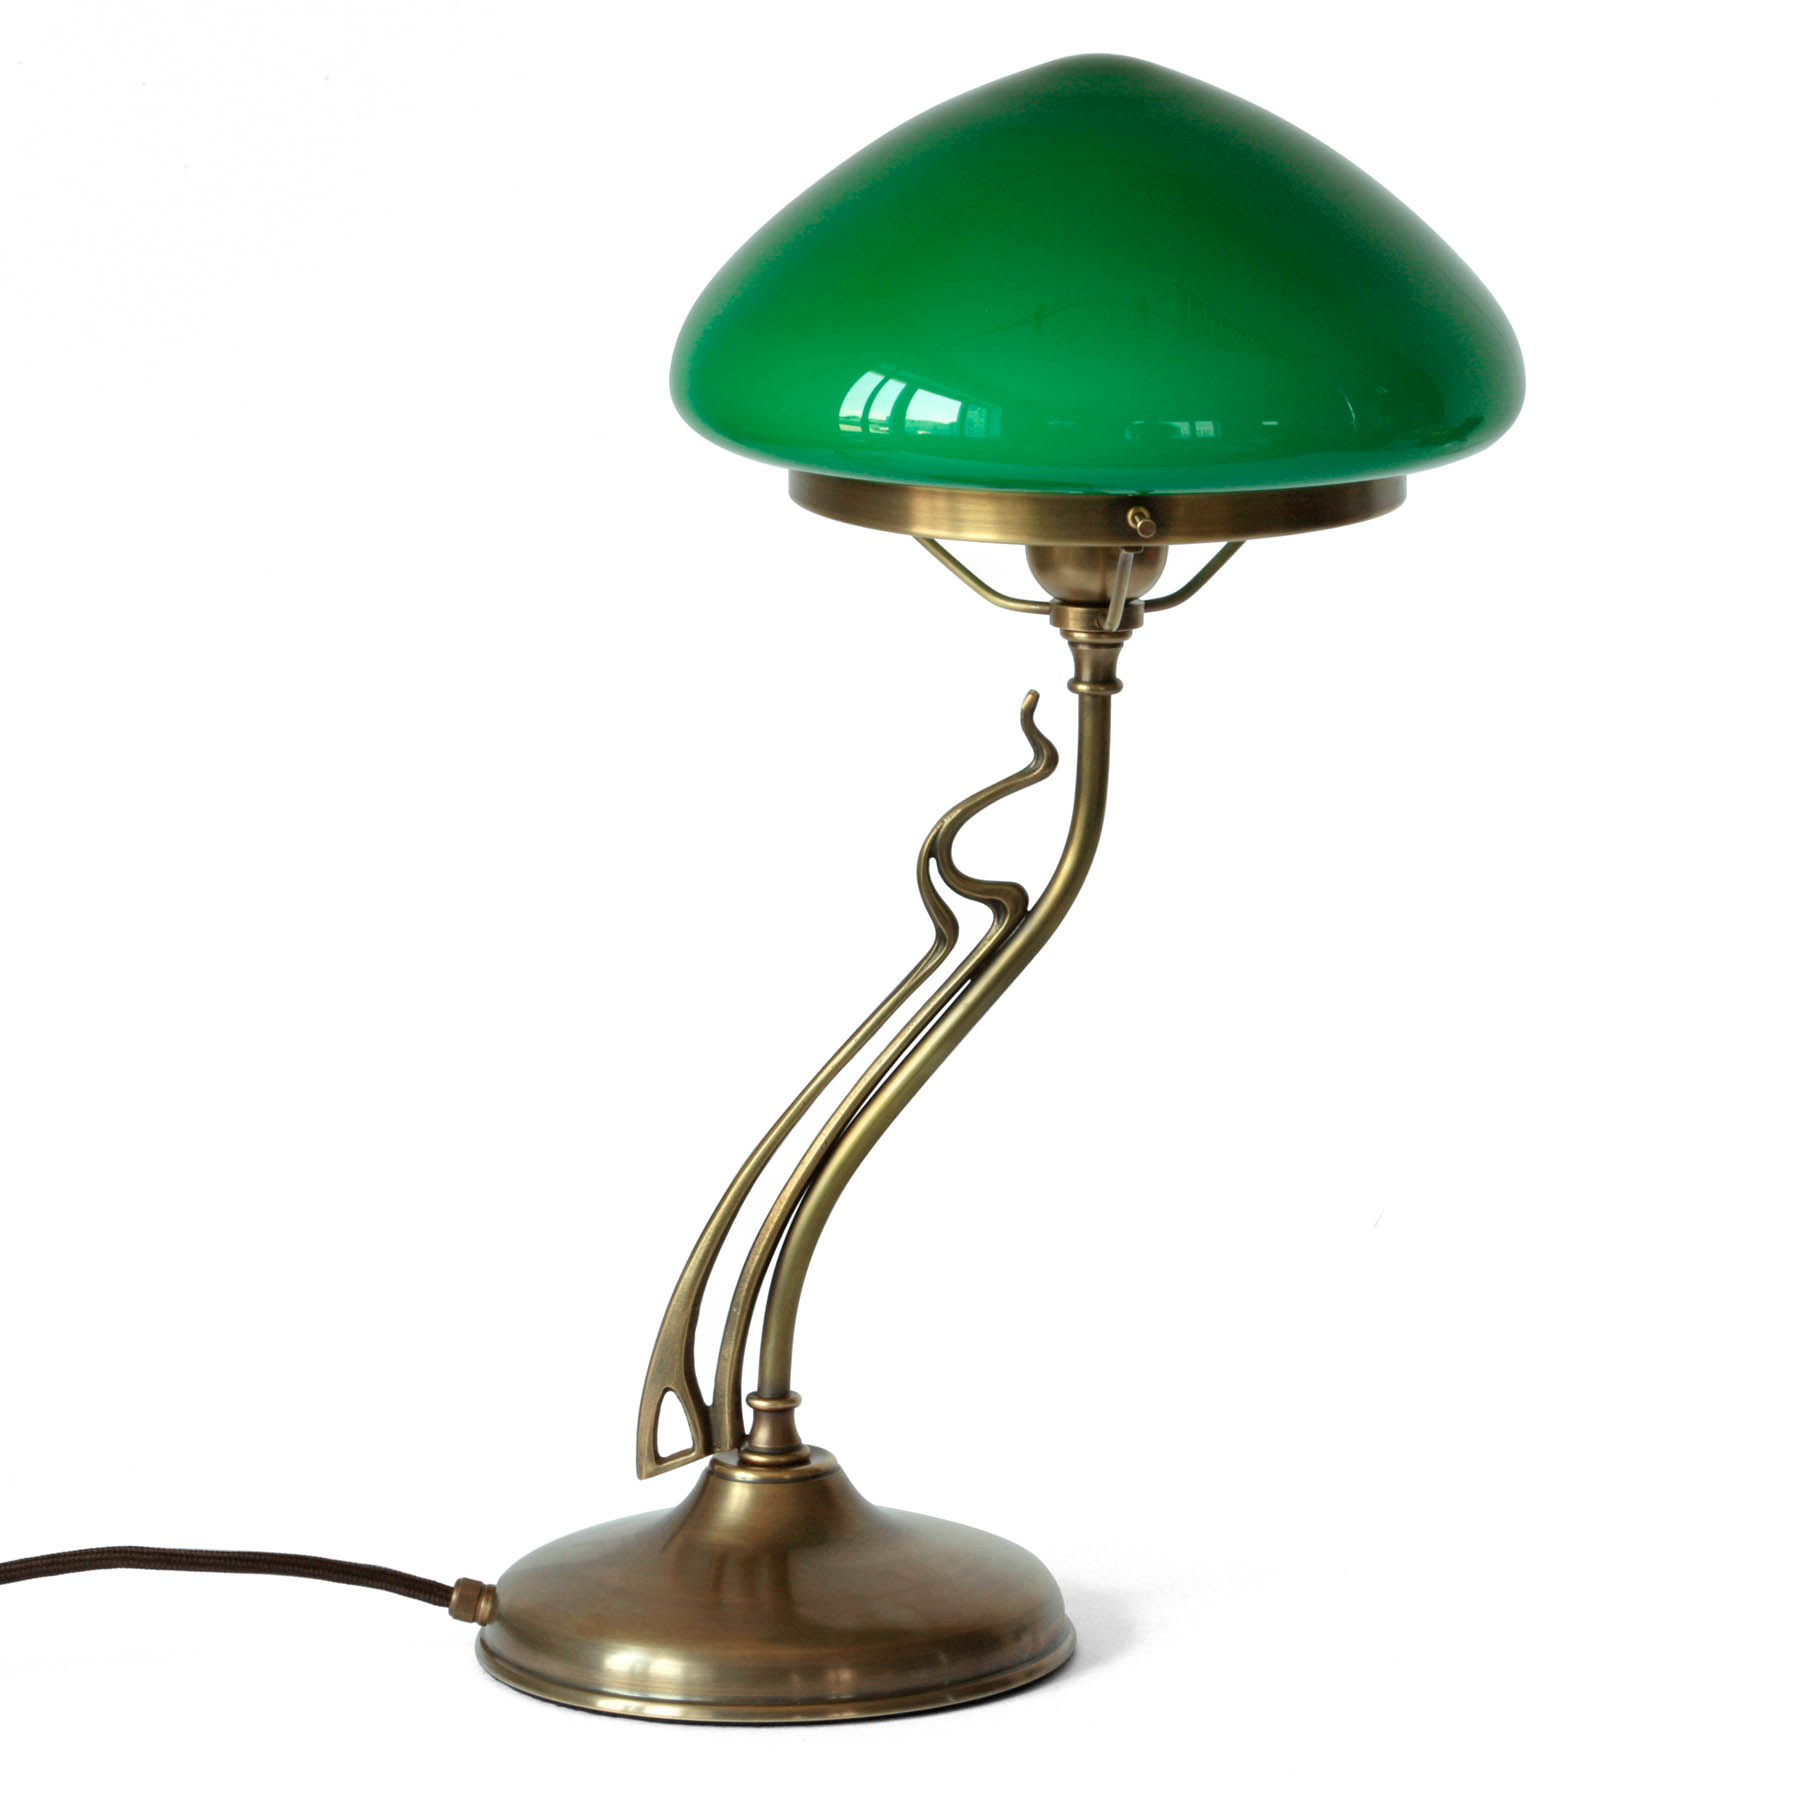 Art Nouveau "Mushroom" Table Lamp with Curved Brass Frame: Abgebildet in antik handpatiniert (Altmessing) und grünem Glas